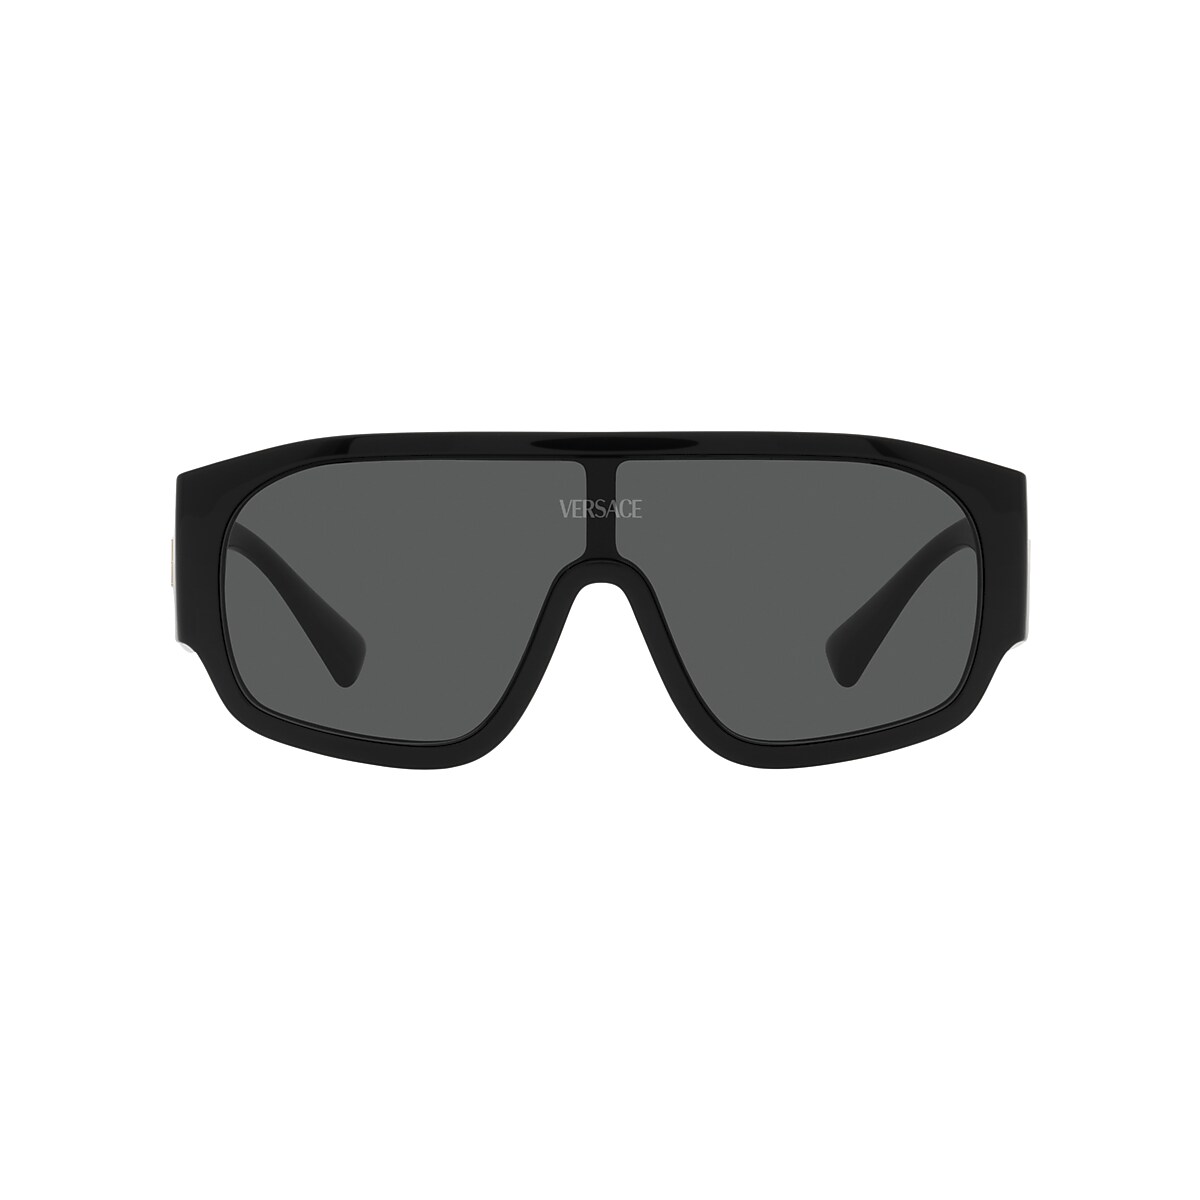 Versace VE4439 01 Dark Grey & Black Sunglasses